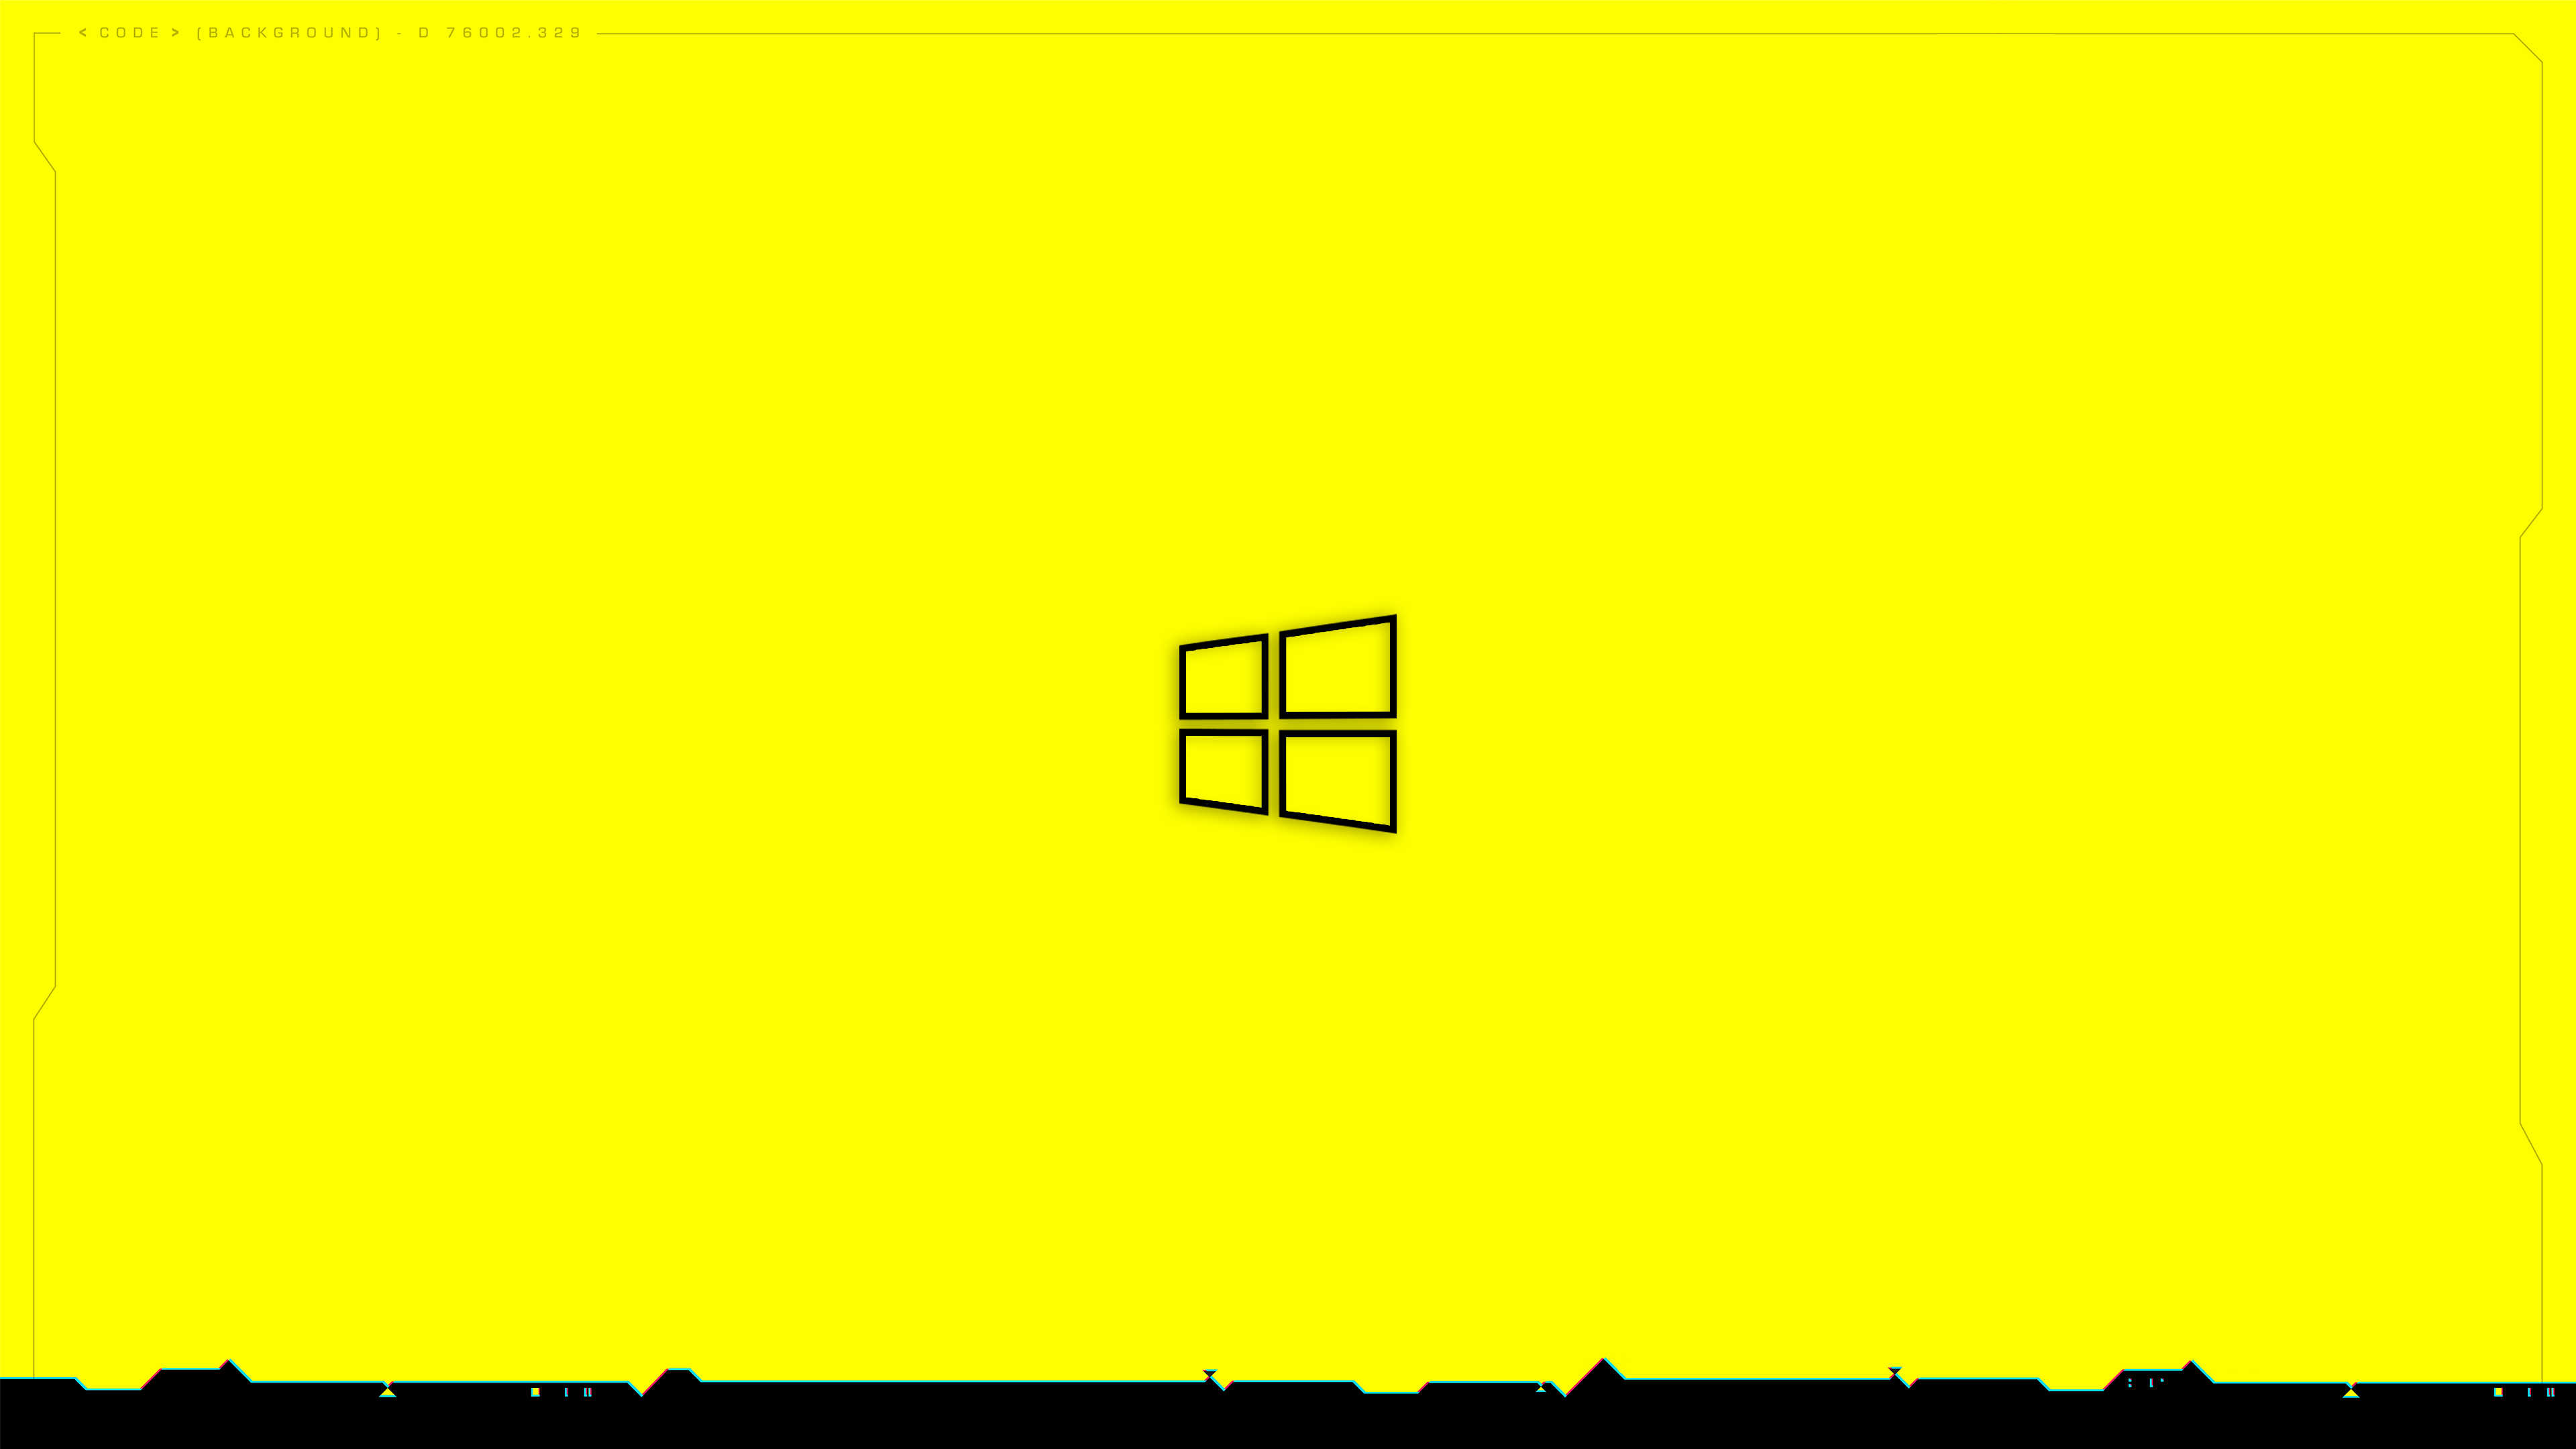 General 3840x2160 Windows 10 Cyberpunk 2077 minimalism simple background yellow background logo video games PC gaming